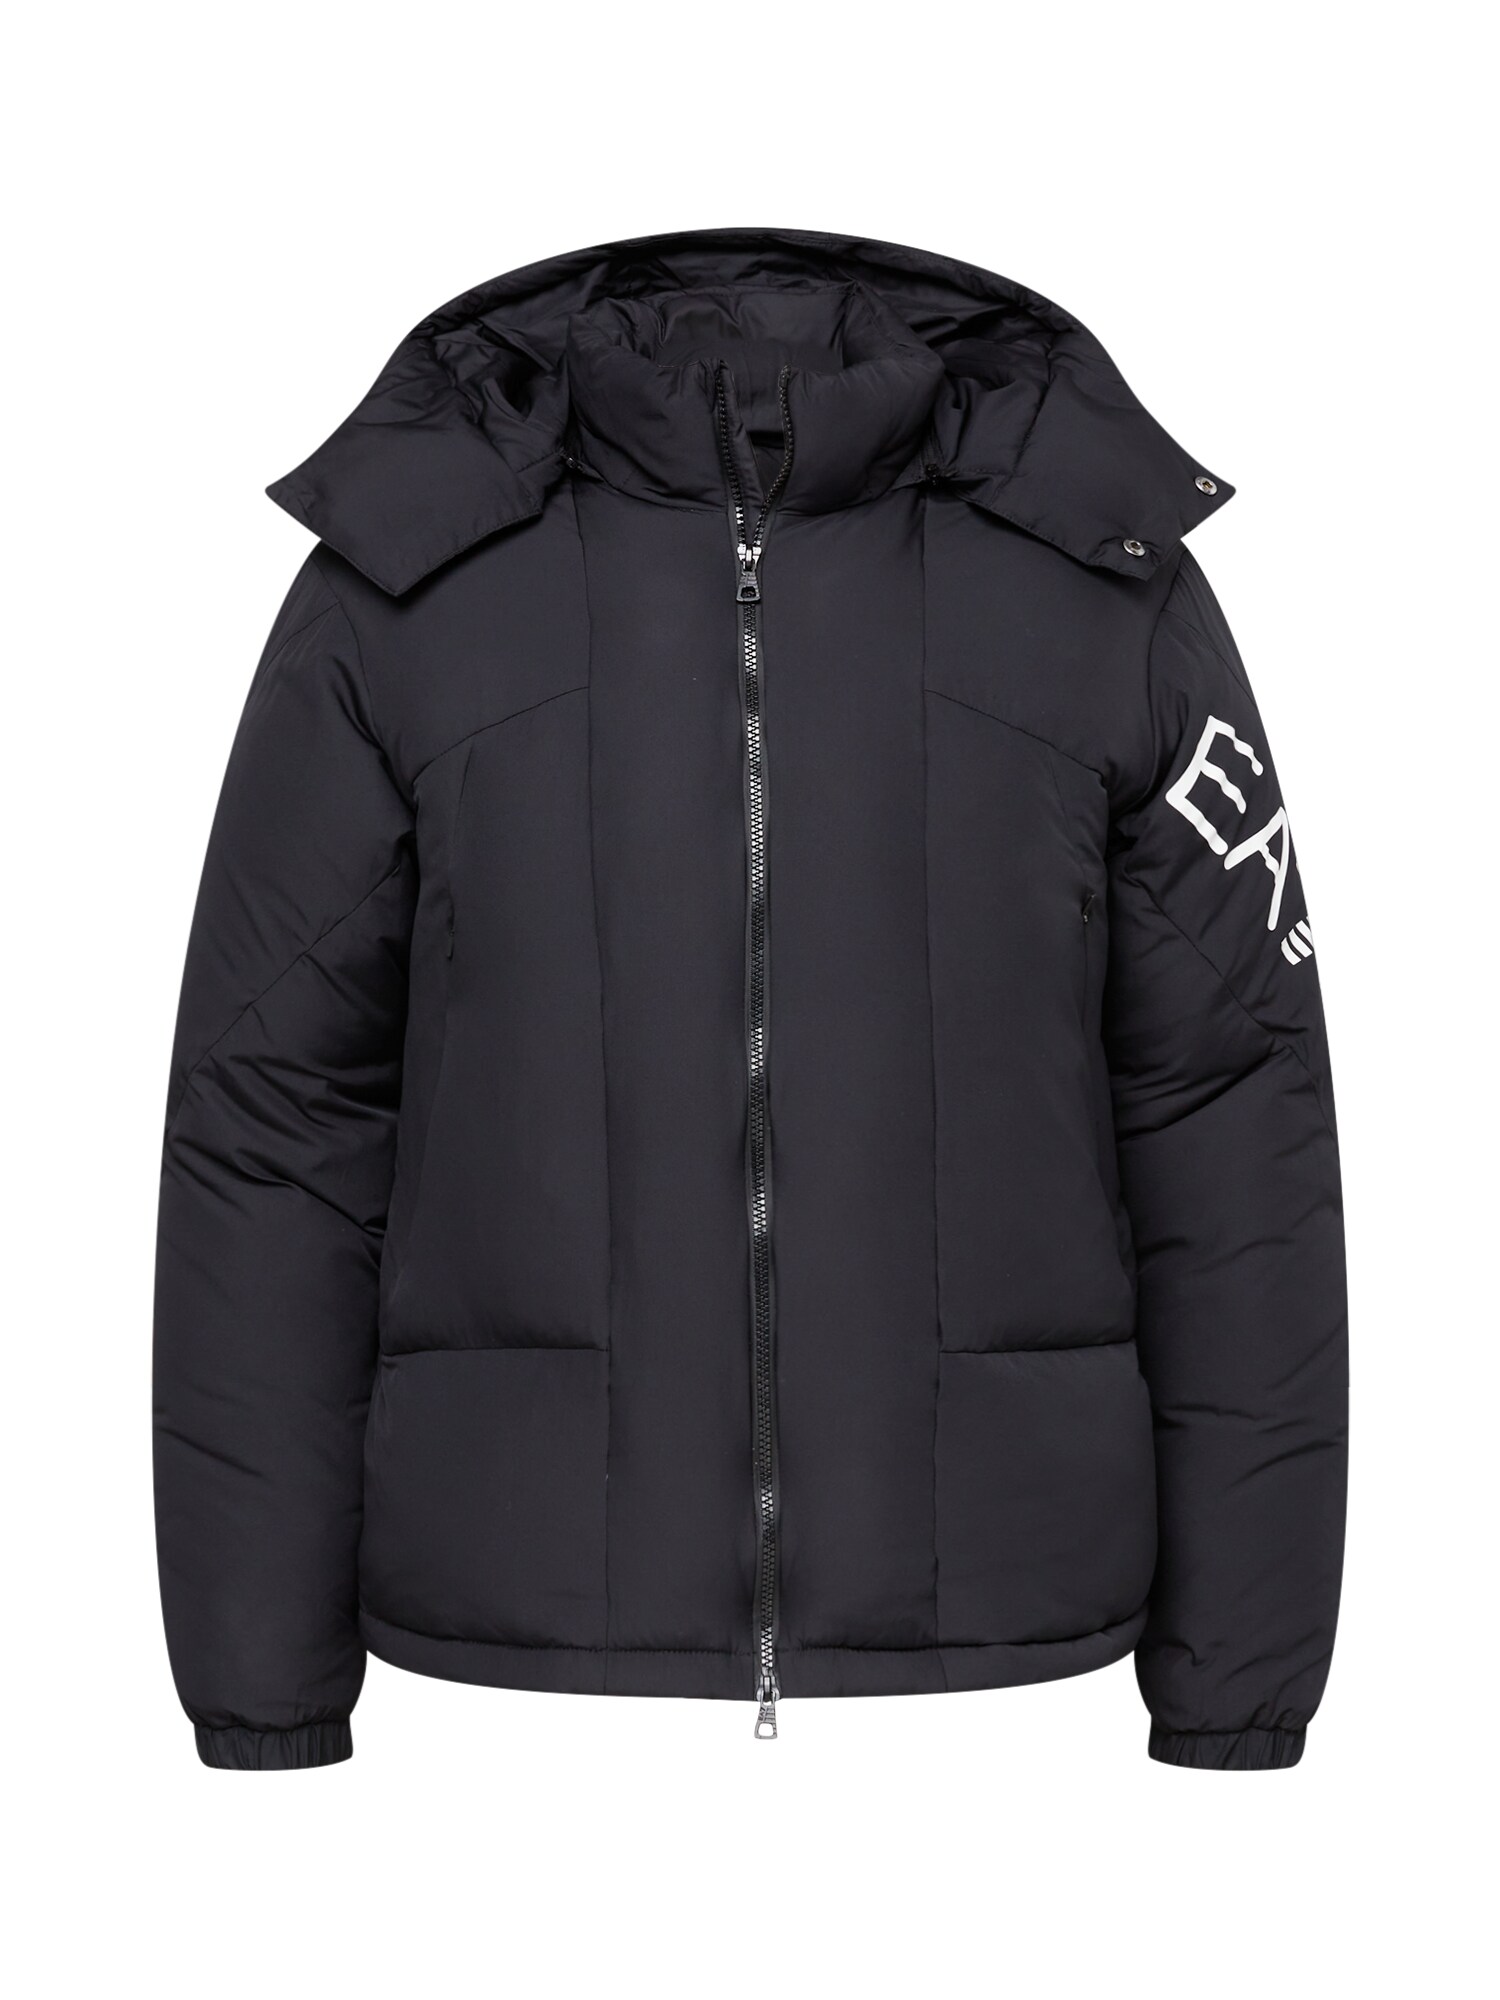 EA7 Emporio Armani Zimska jakna  črna / bela